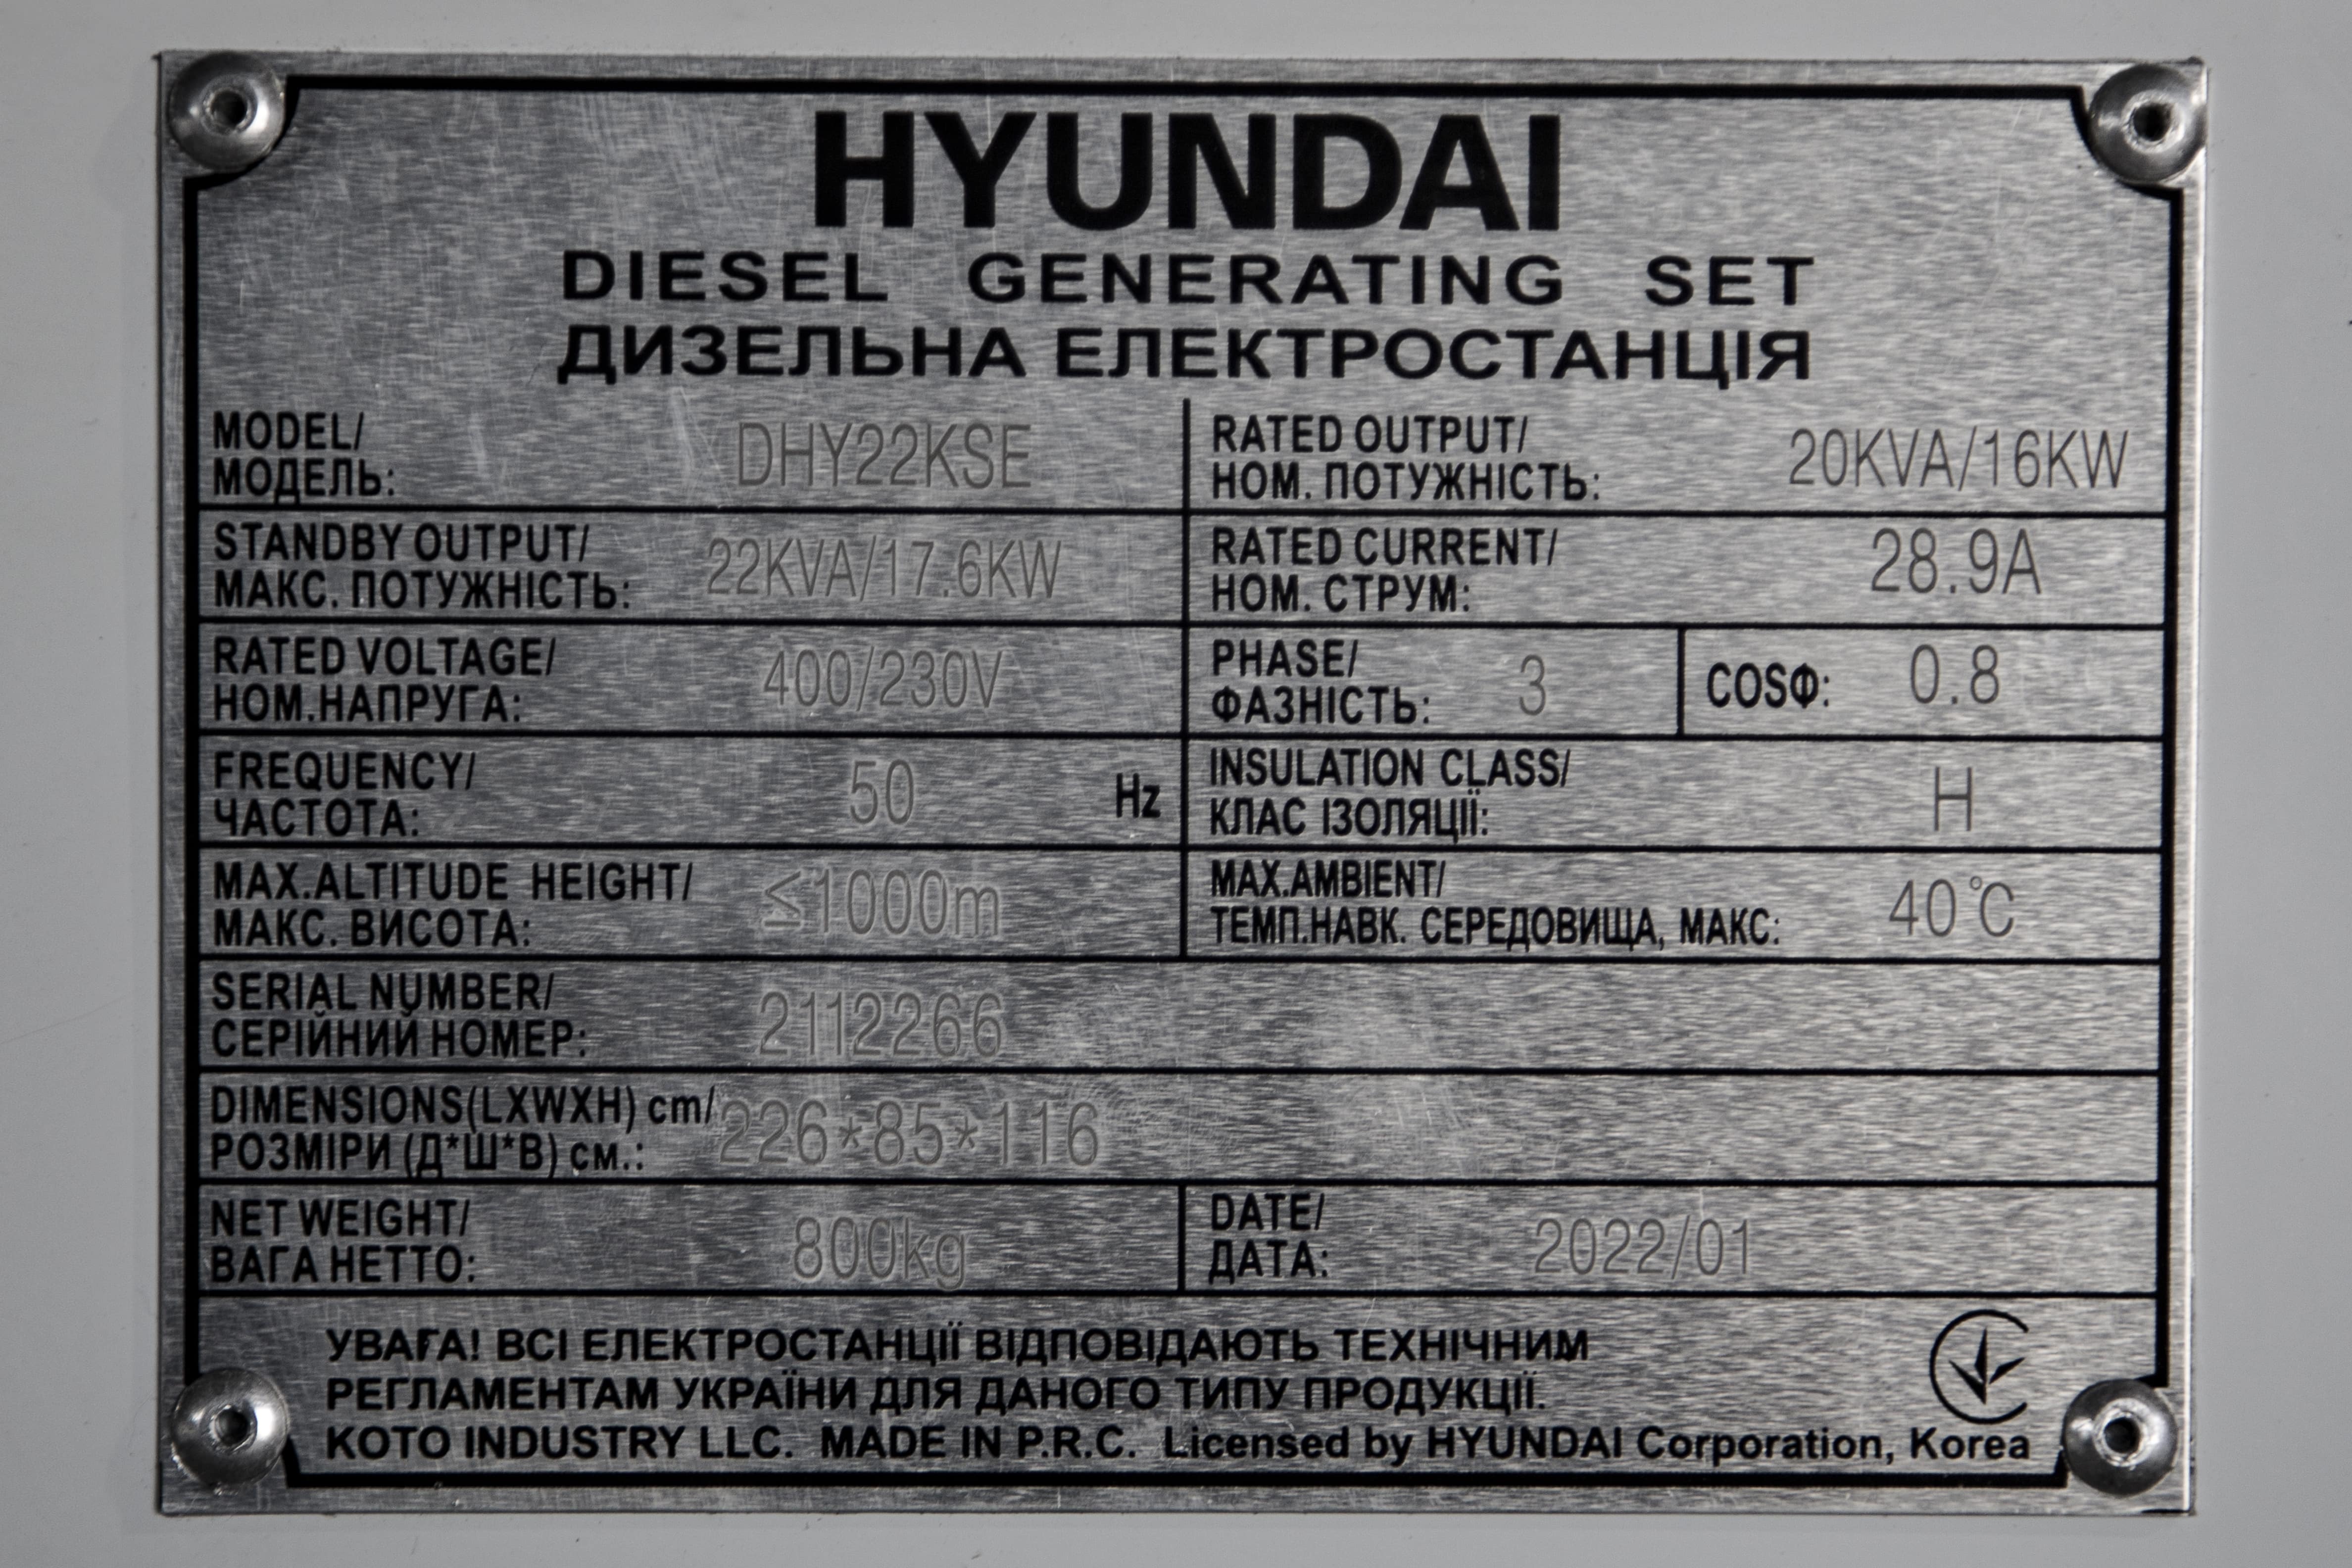 Генератор Hyundai DHY 22KSE цена 357816.00 грн - фотография 2